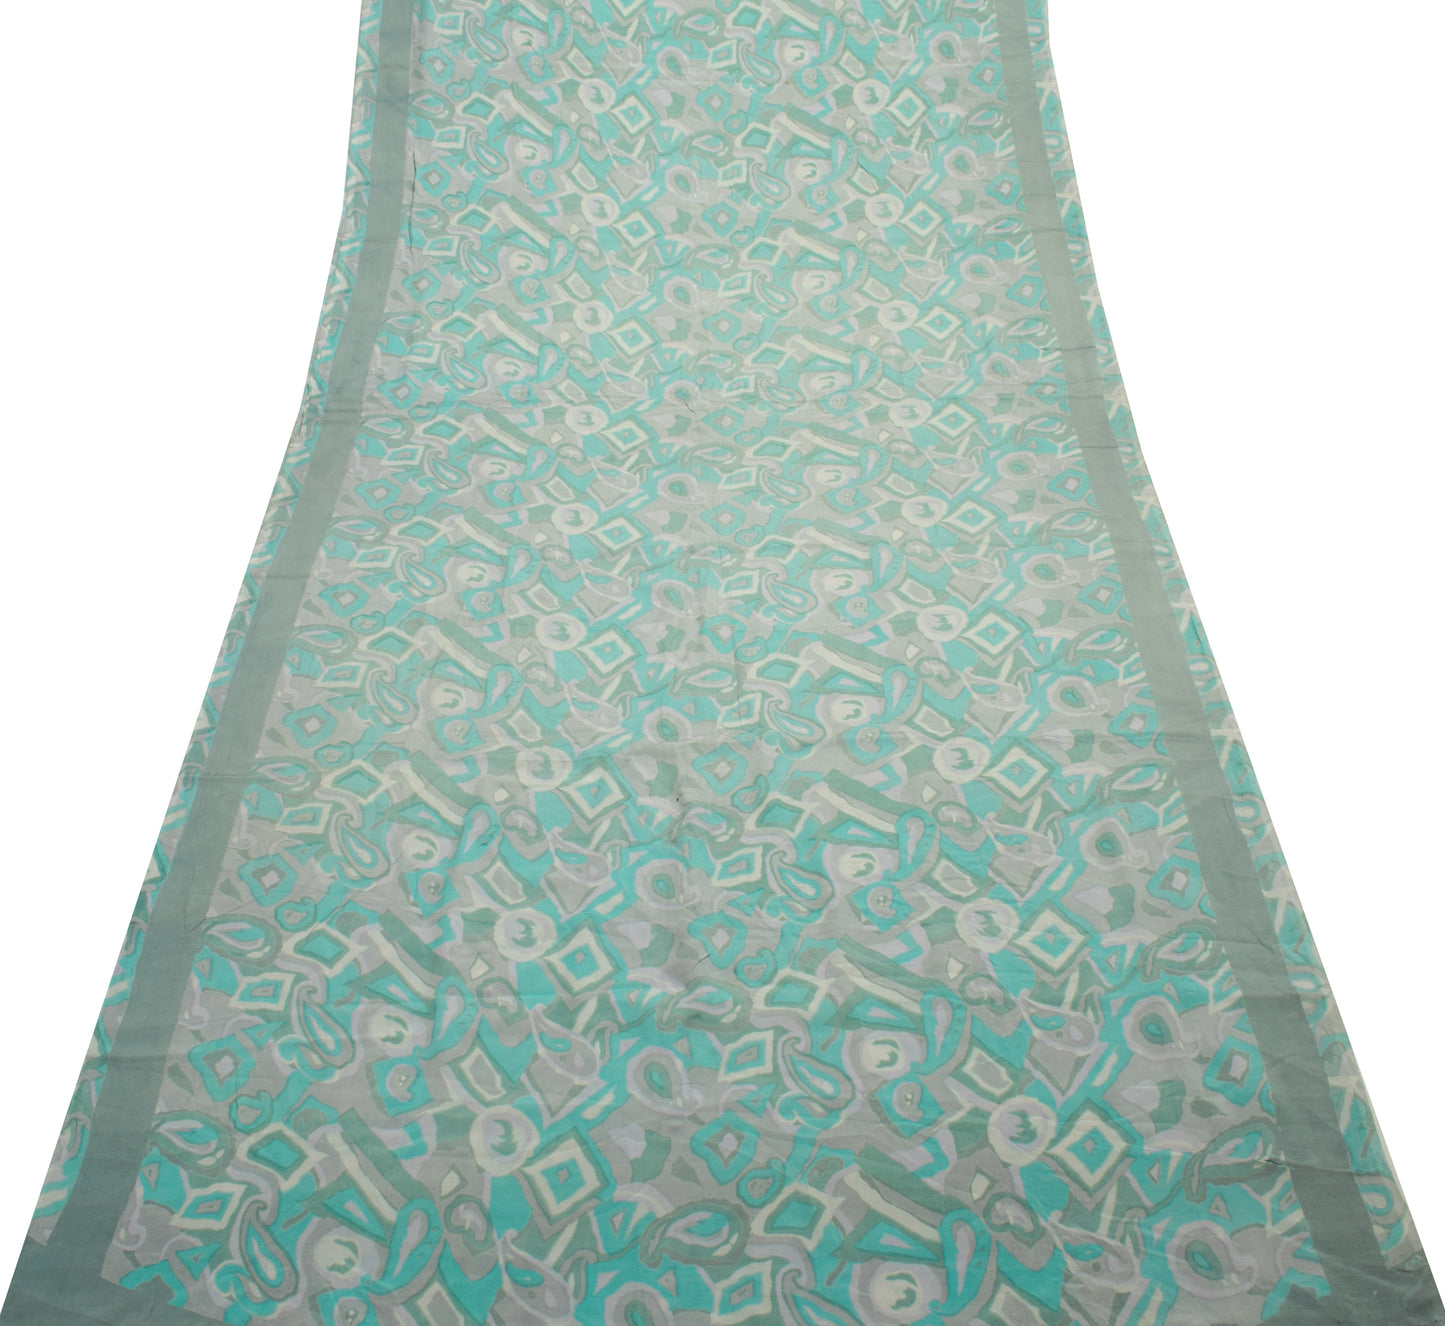 Sushila Vintage MultiColor Saree 100%Pure Crepe Silk Printed Paisley Soft Fabric